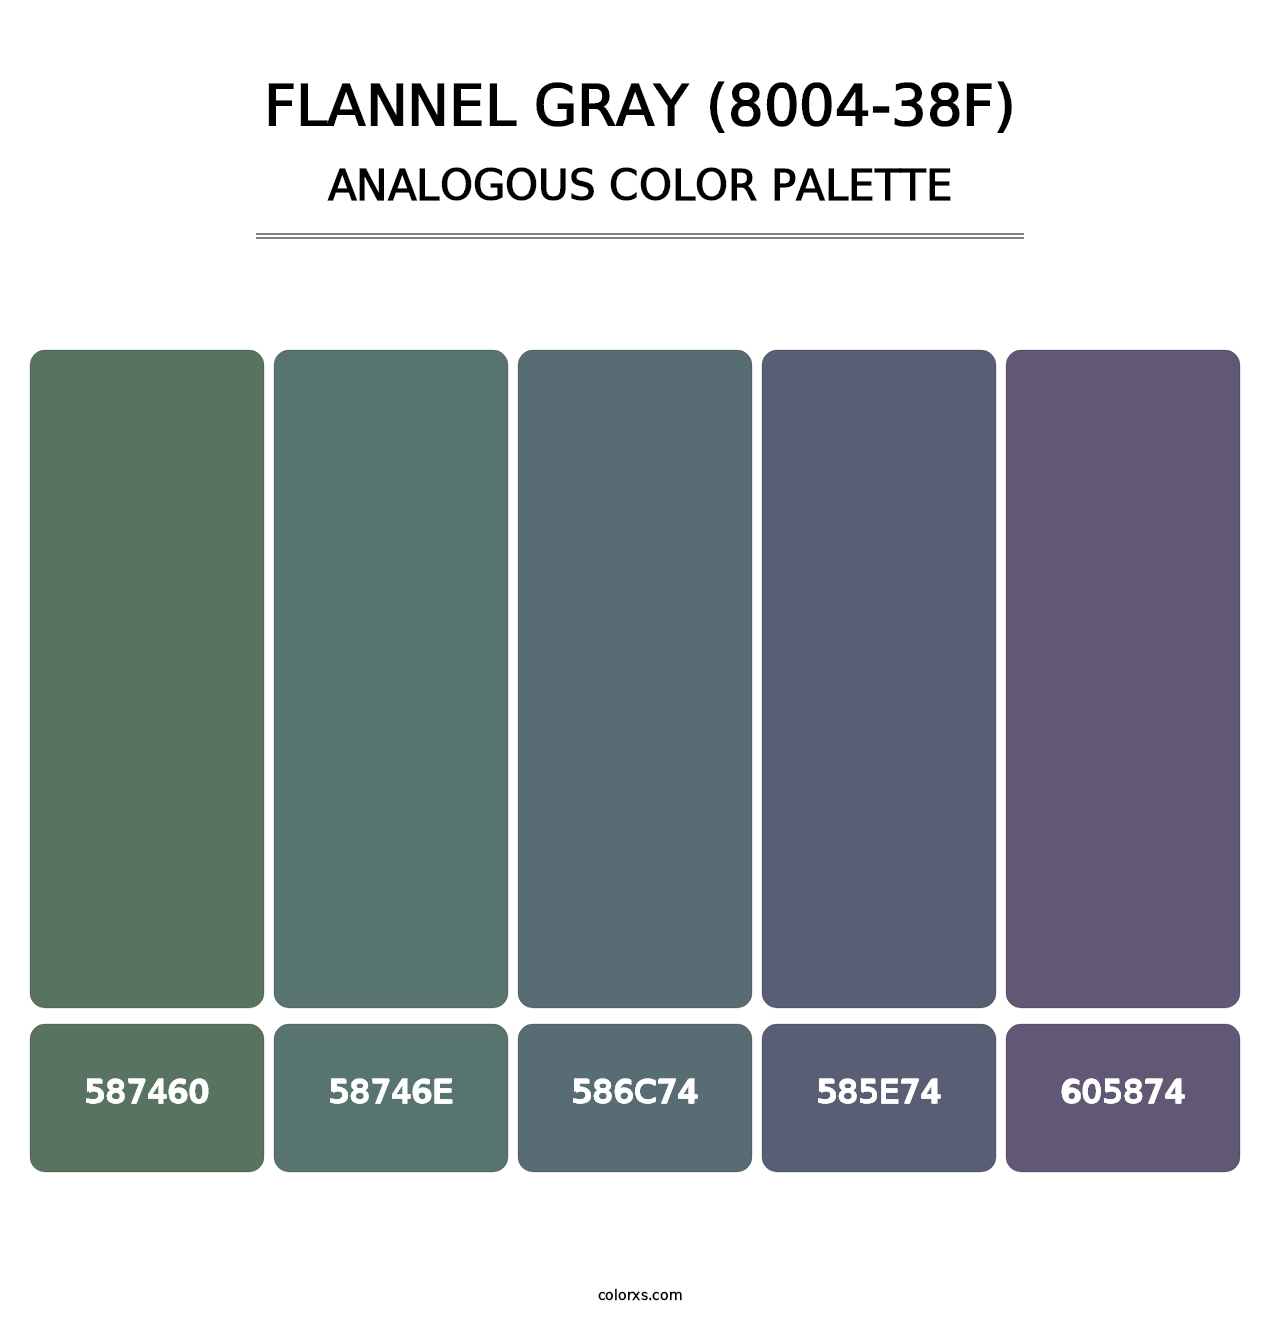 Flannel Gray (8004-38F) - Analogous Color Palette